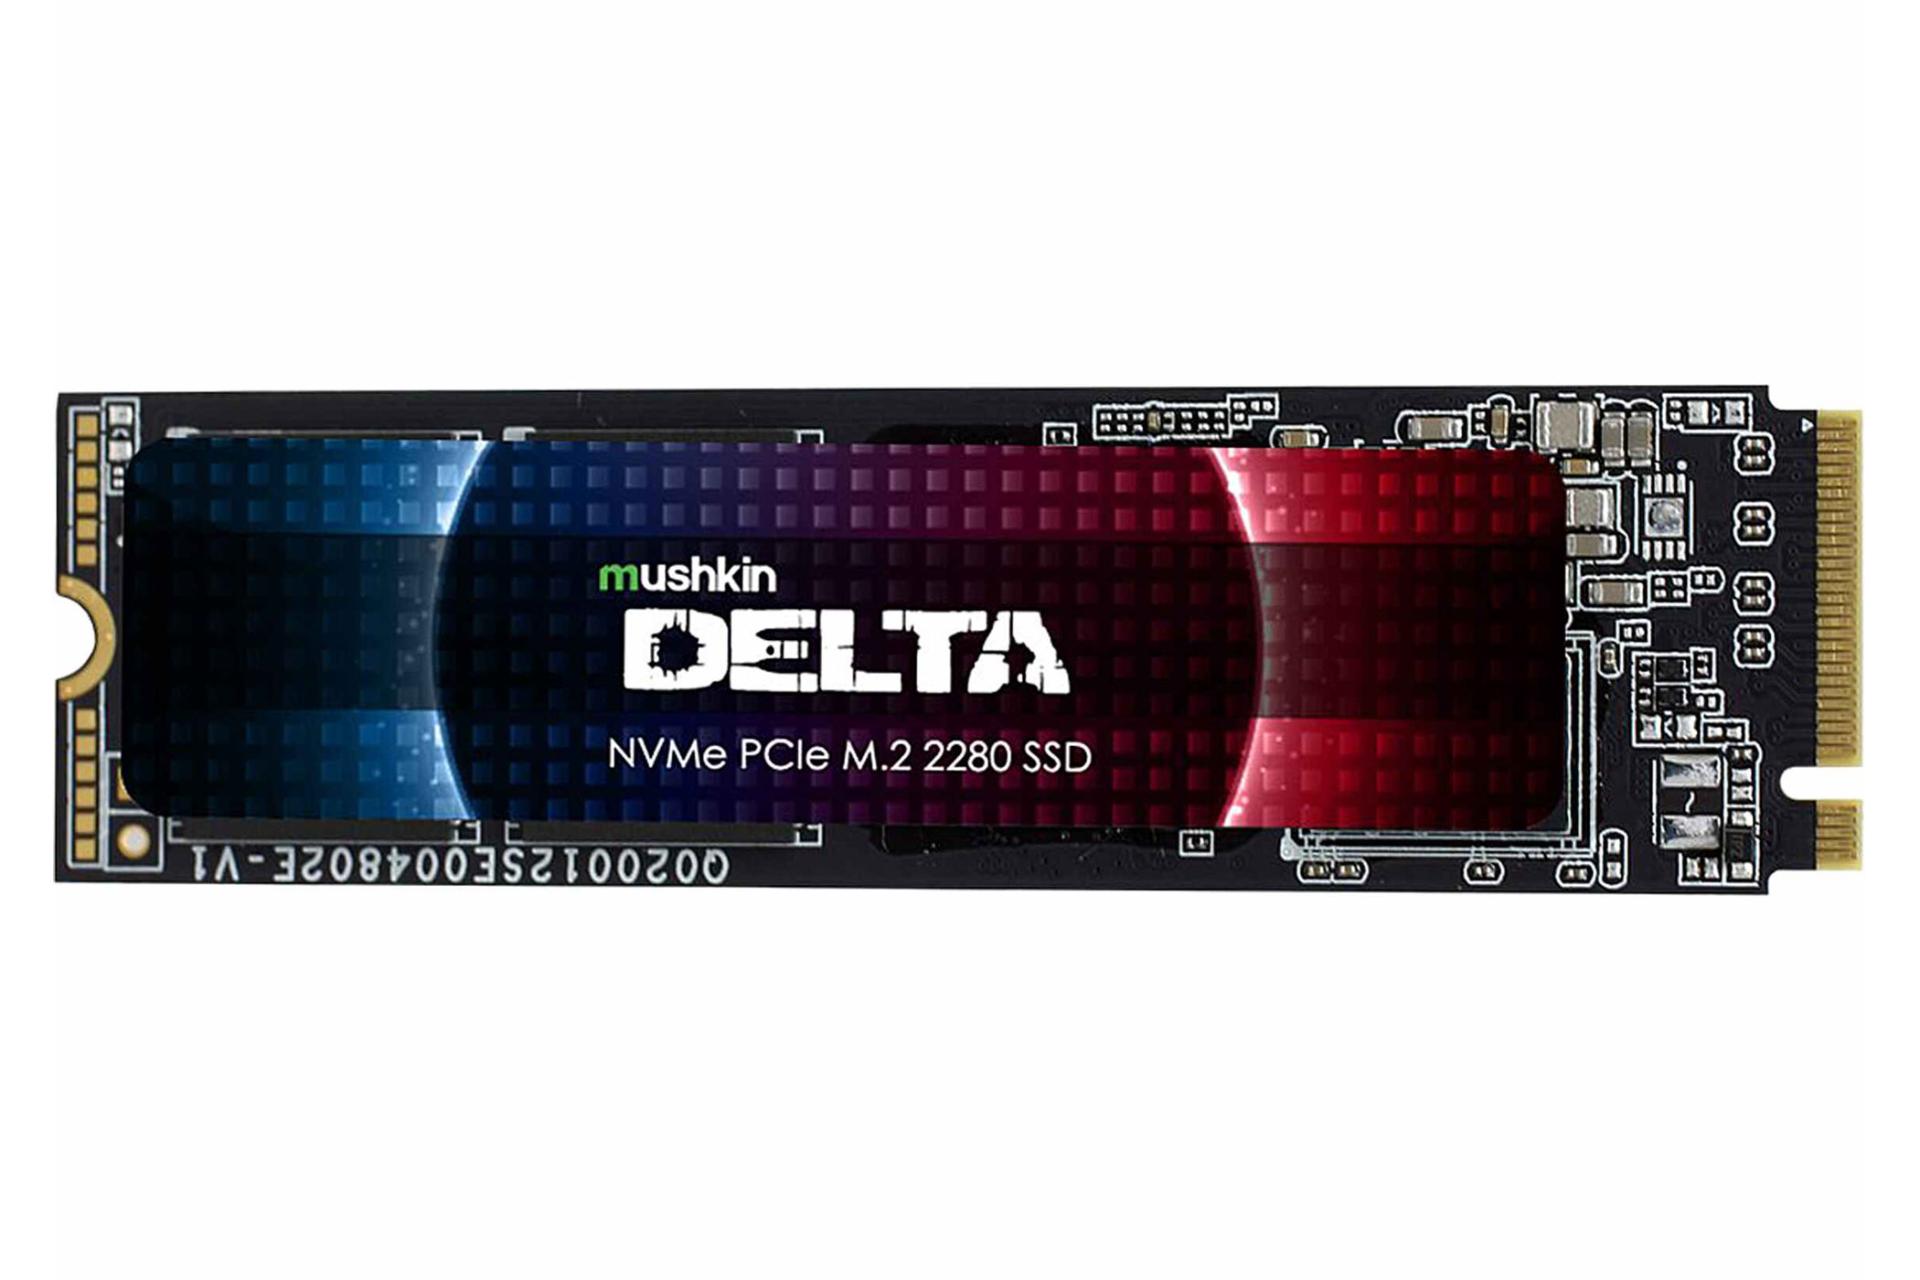 SSD ماشکین DELTA NVMe M.2 ظرفیت 4 ترابایت